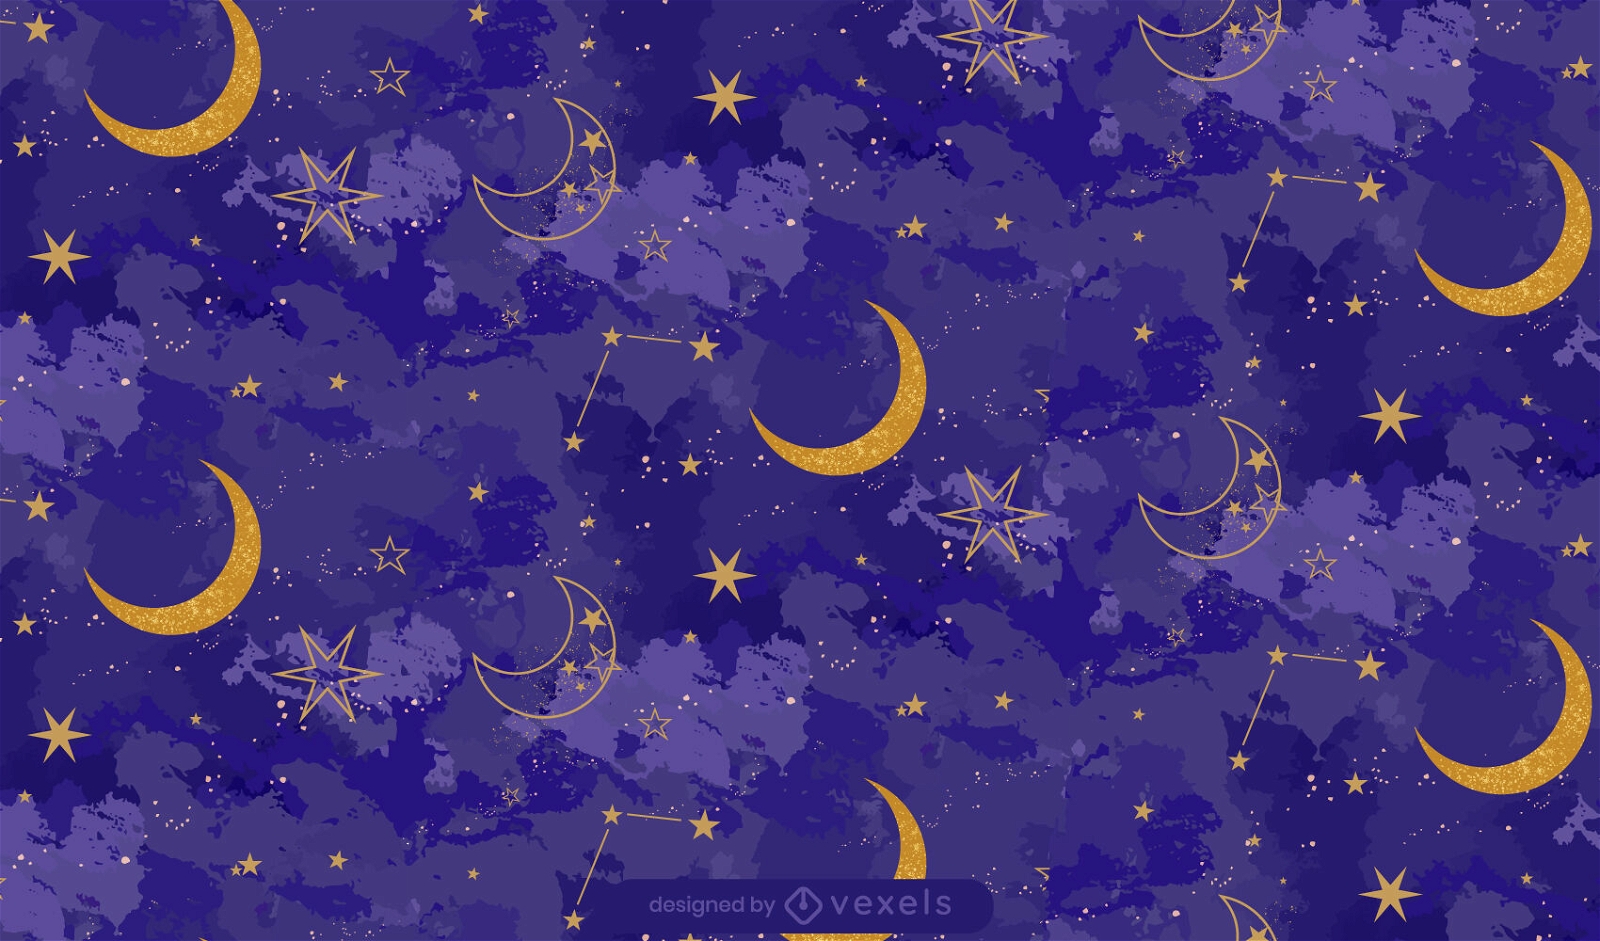 Starry night pattern design